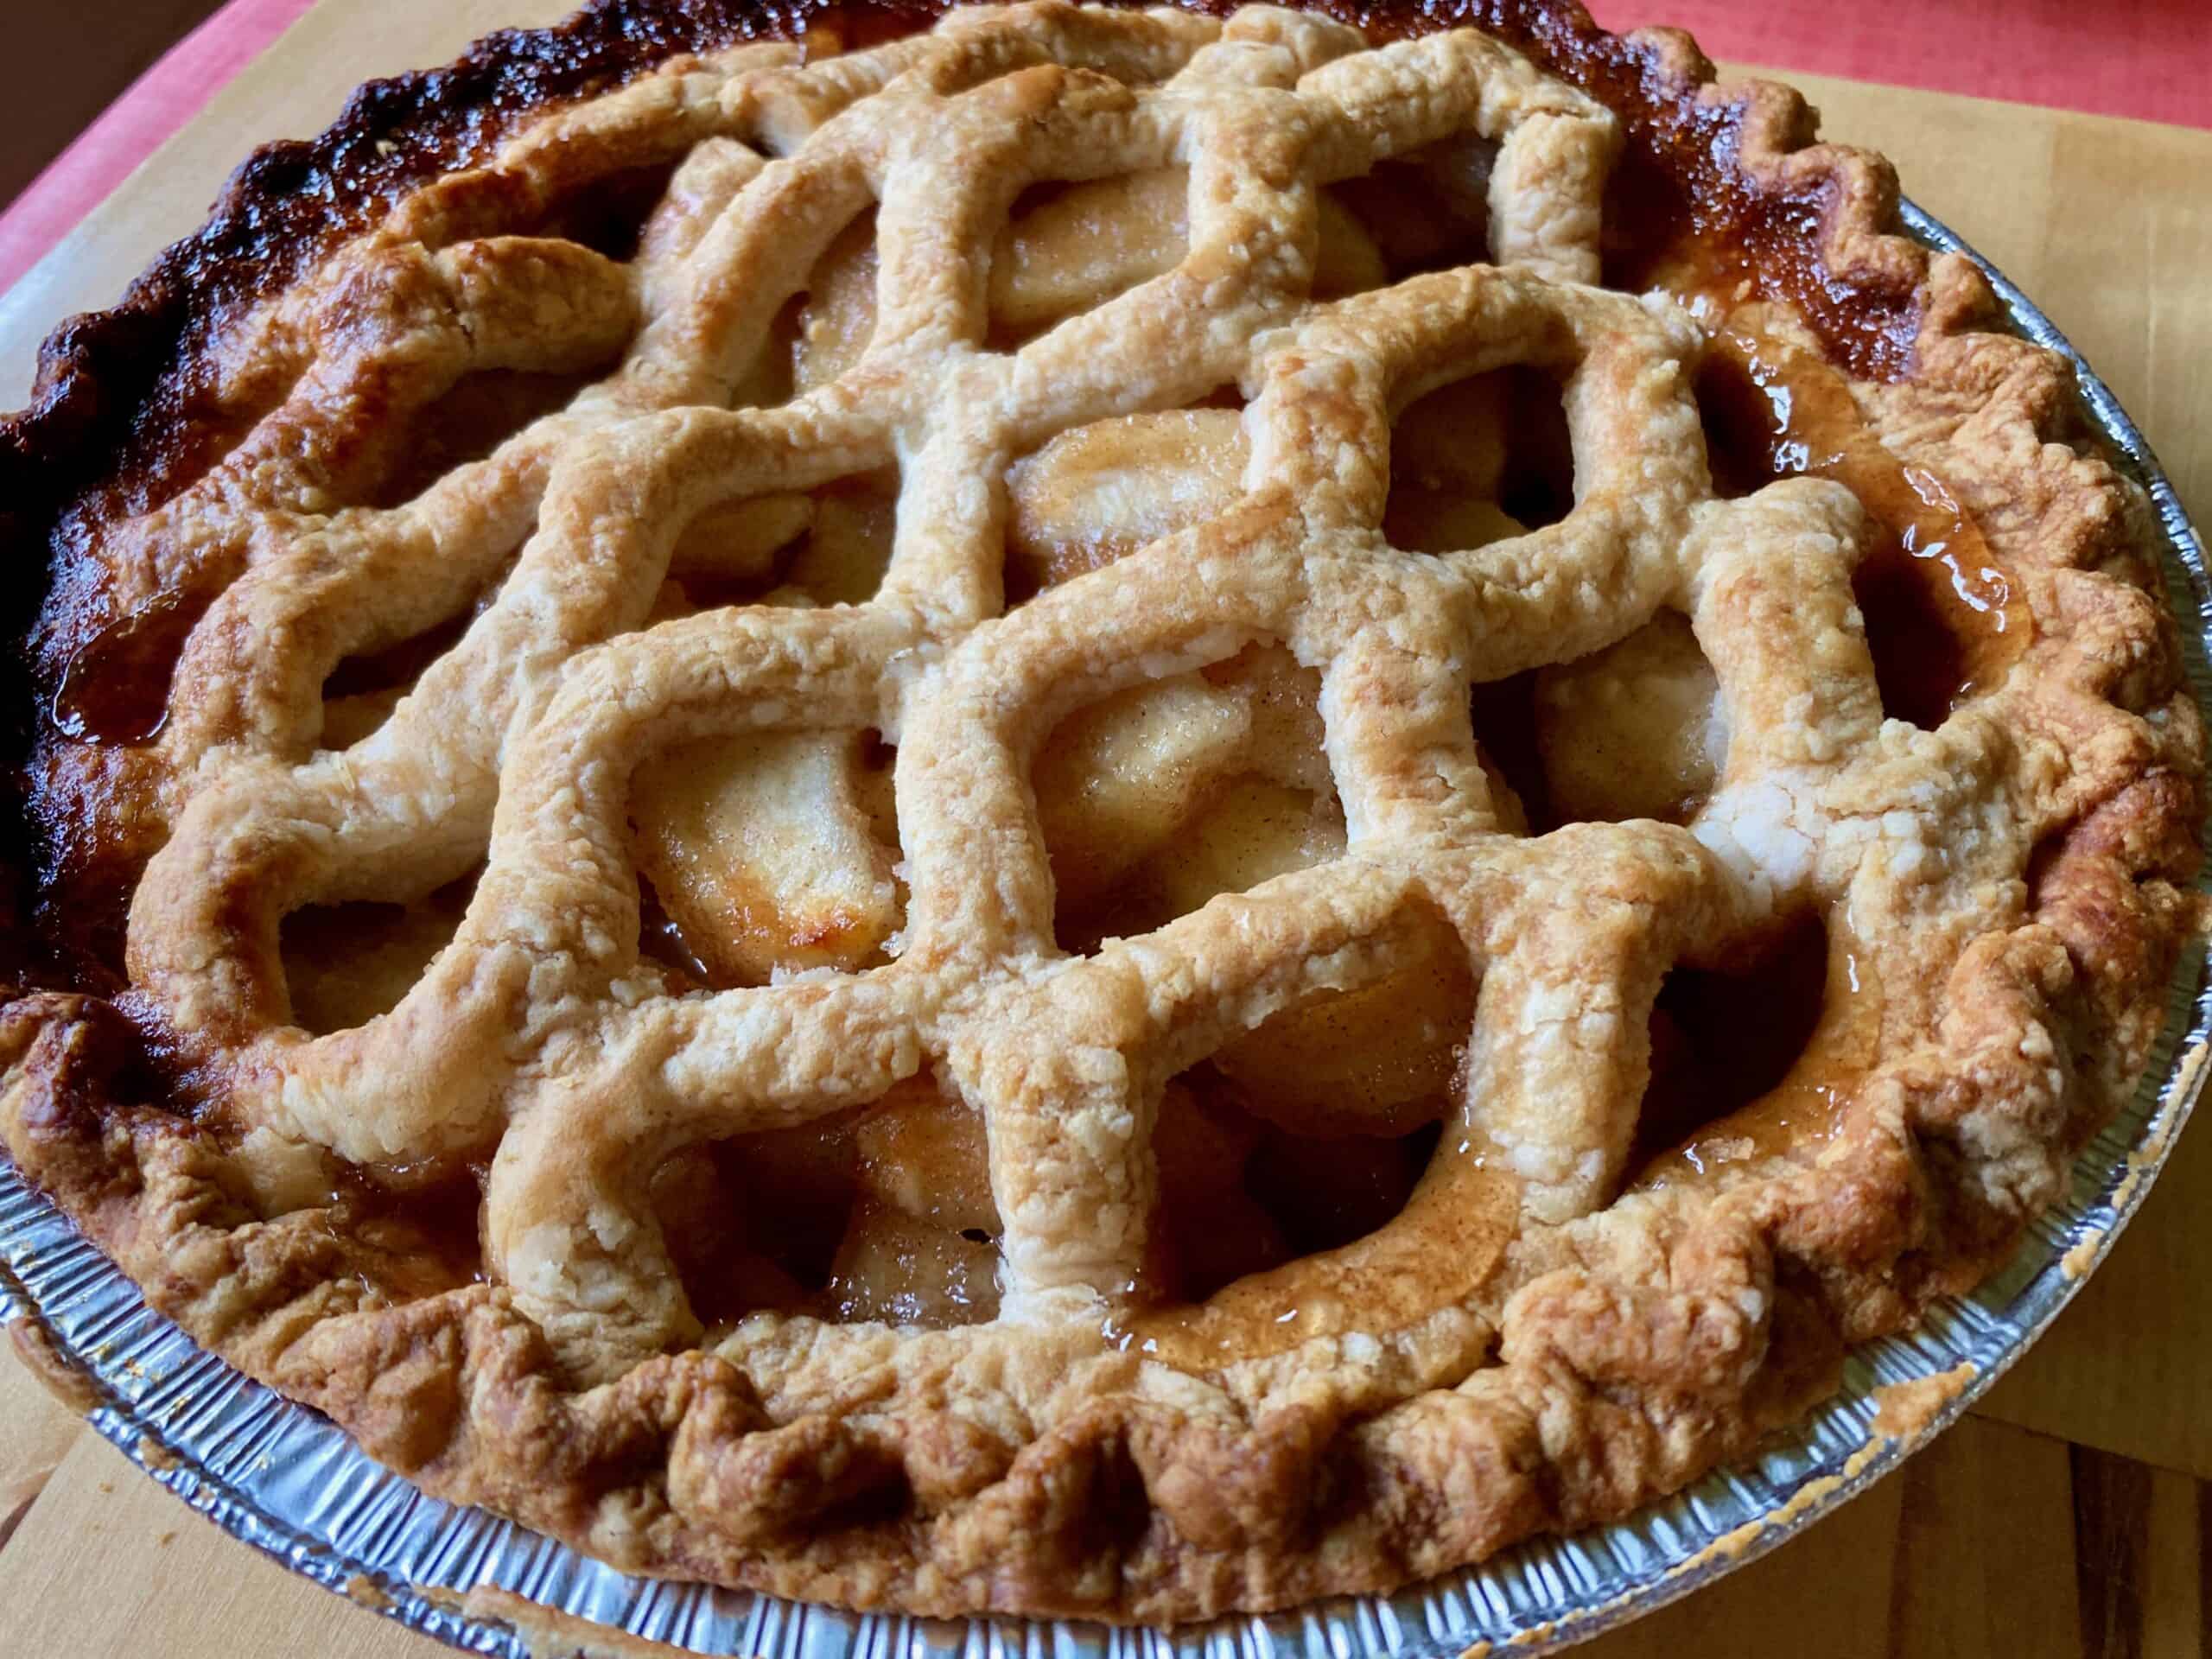 Fresh baked homemade apple pie with lattice crust.